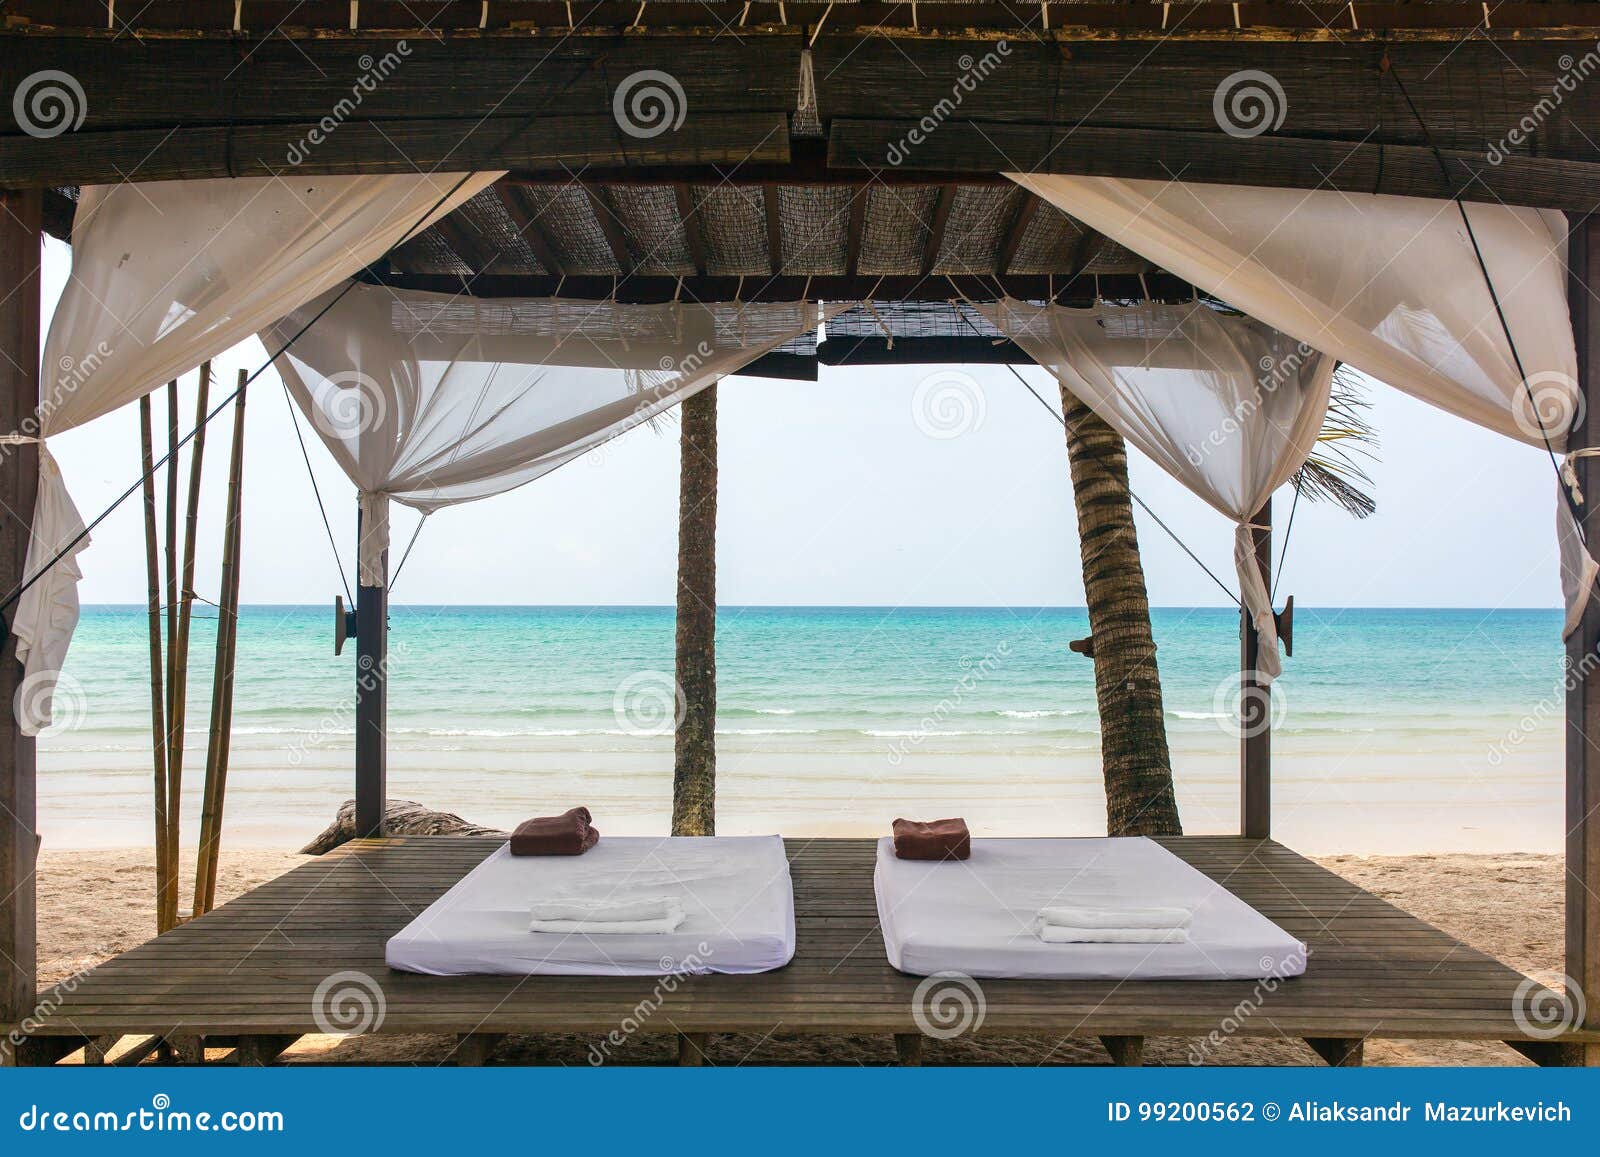 Spa Massage Room on the Beach Stock Photo - Image of health, bali: 99200562